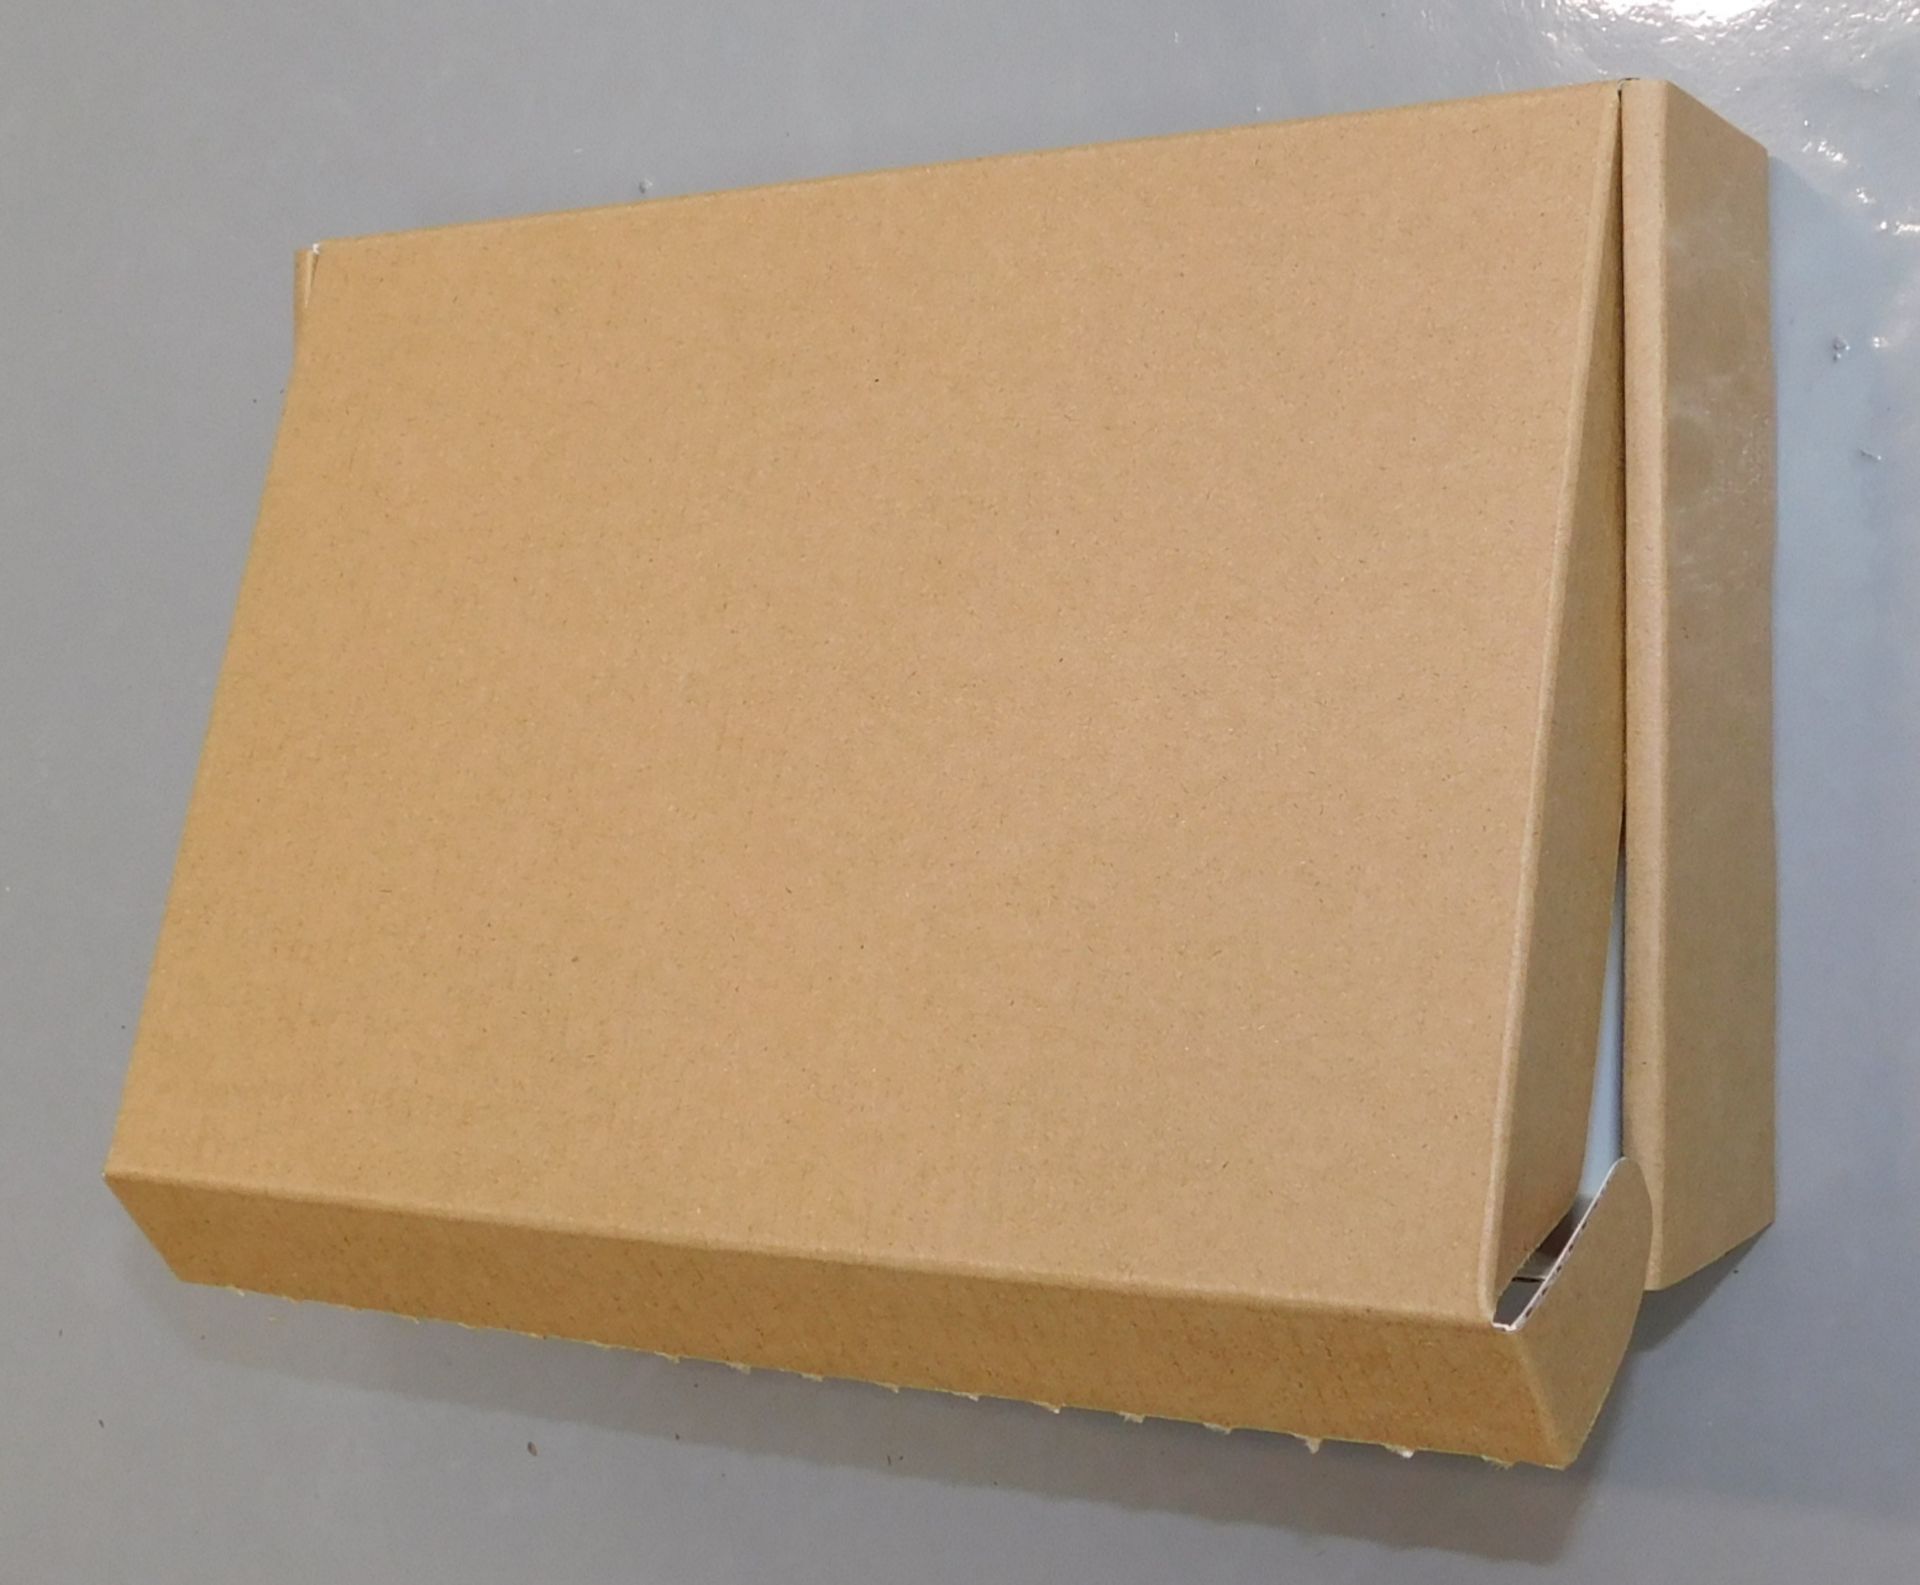 Contents of 6 Pallets of Masuku Cardboard Packaging